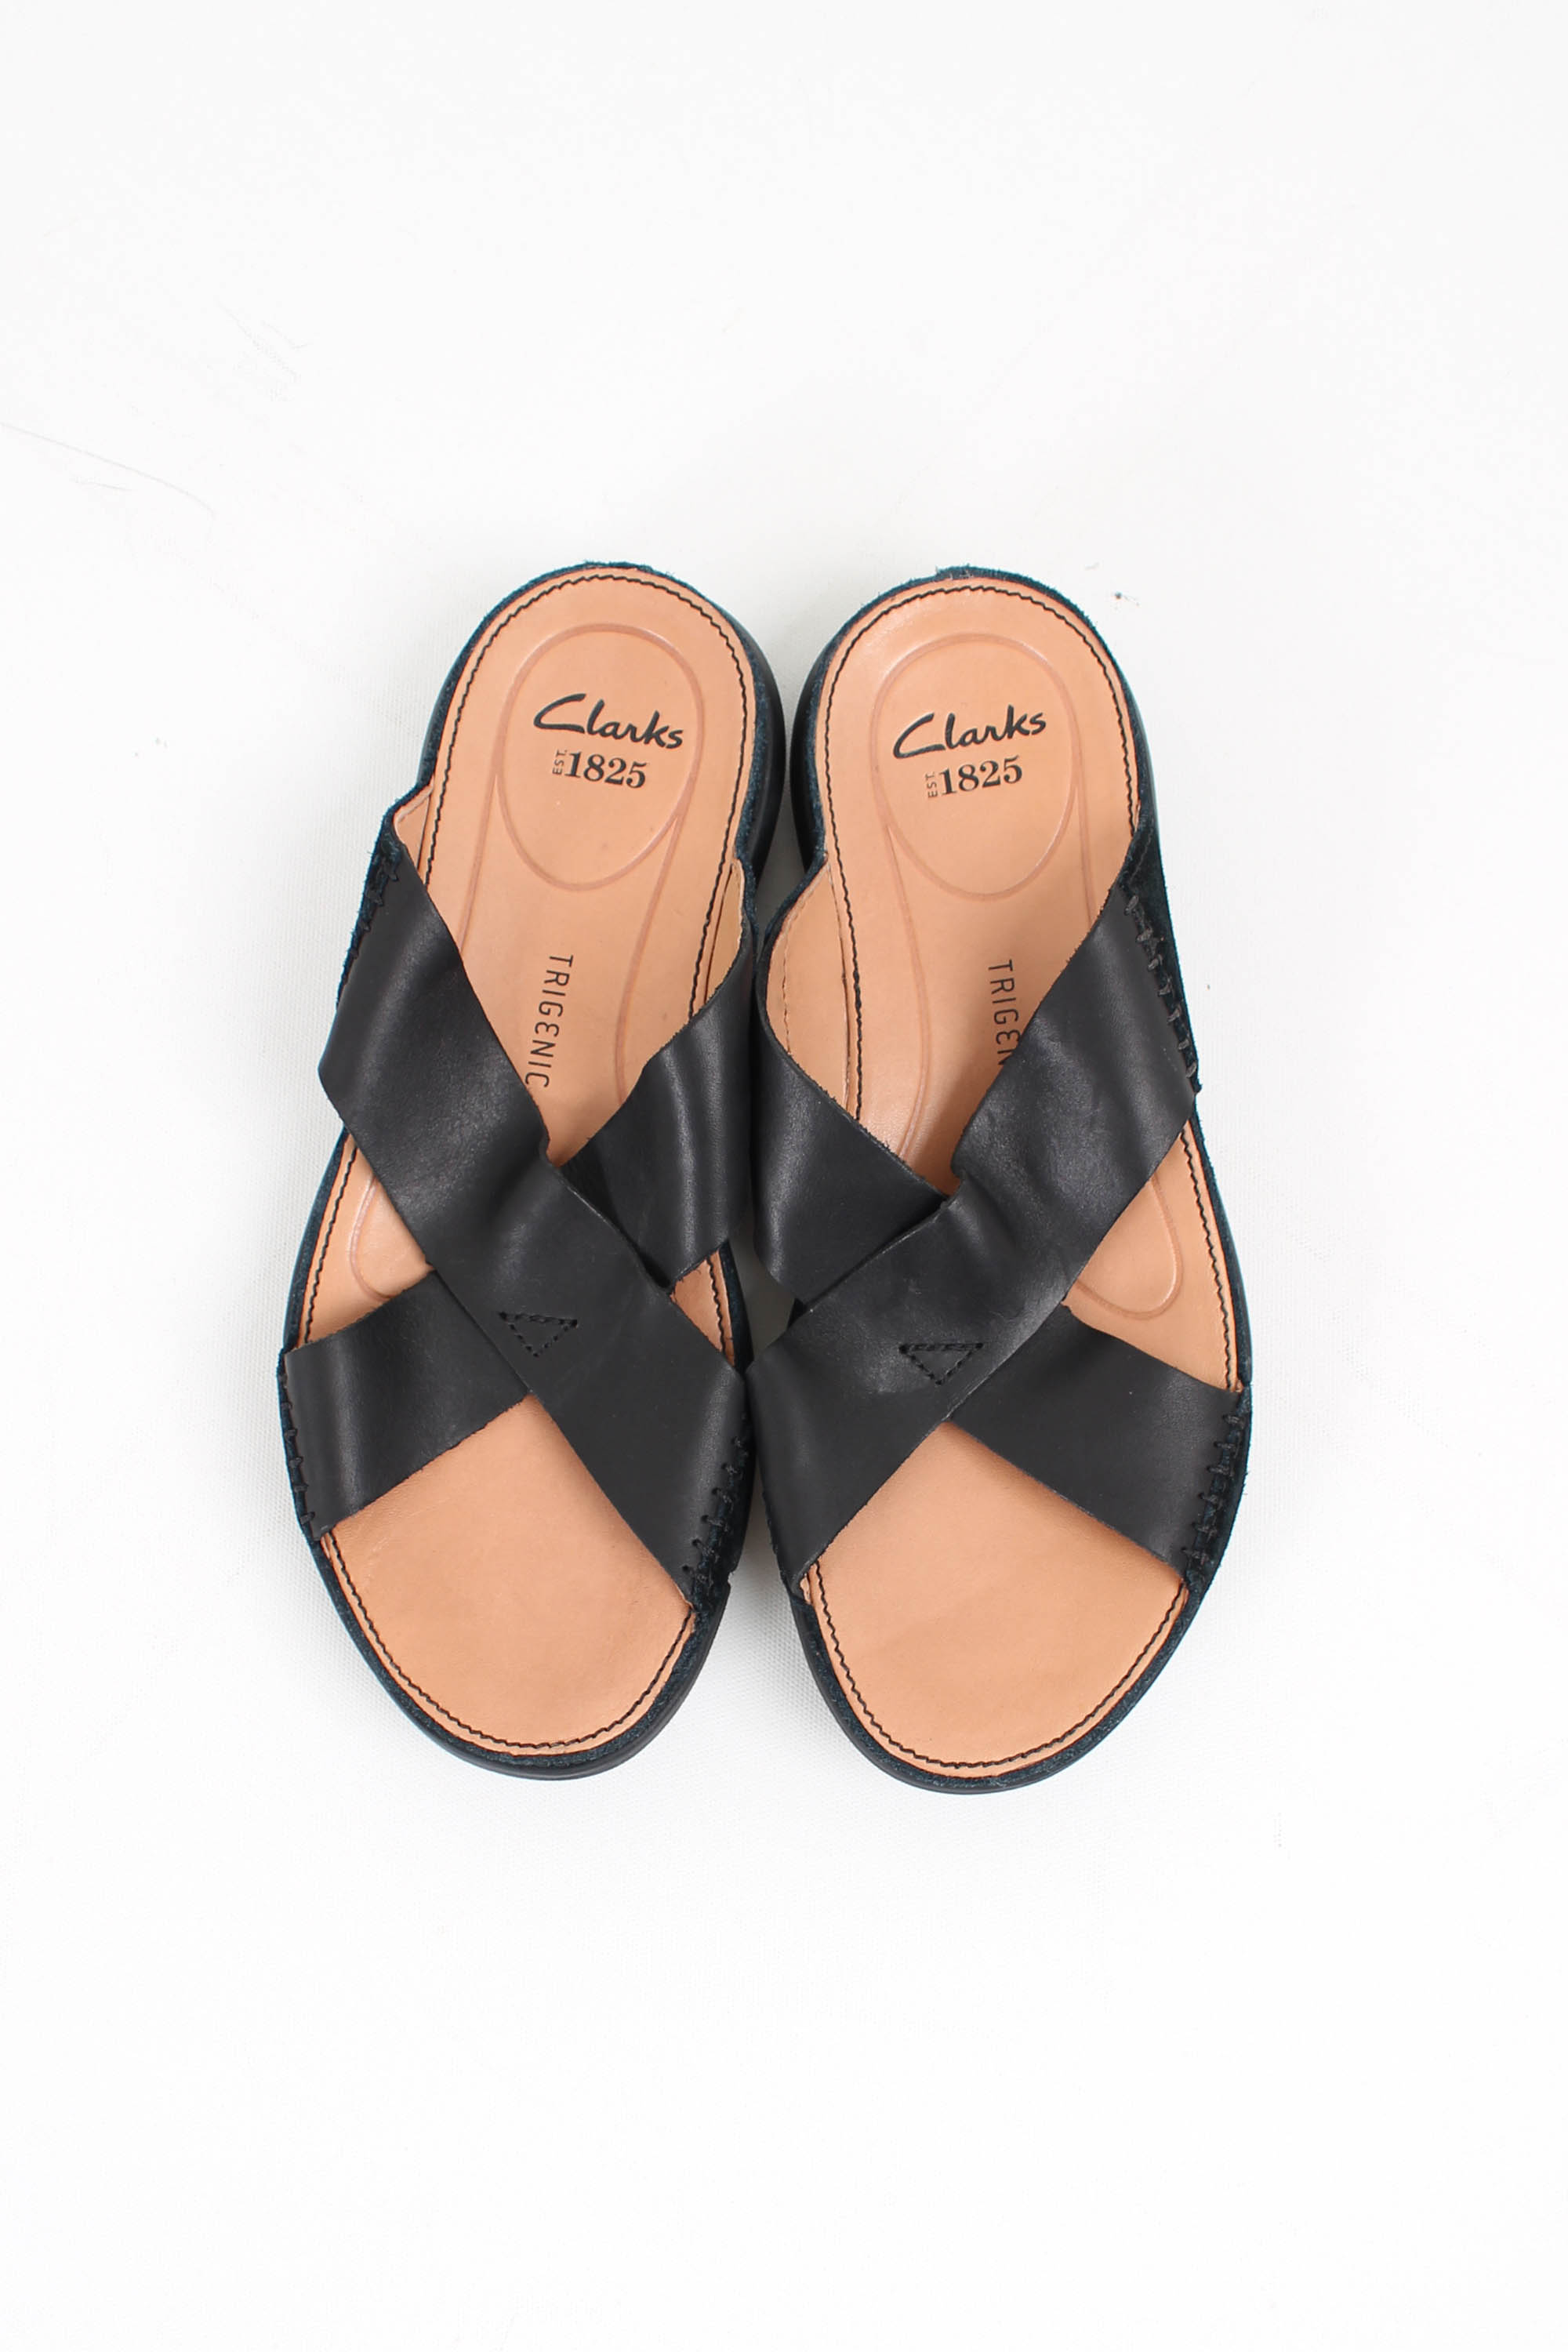 Clarks Trigenic Sandals